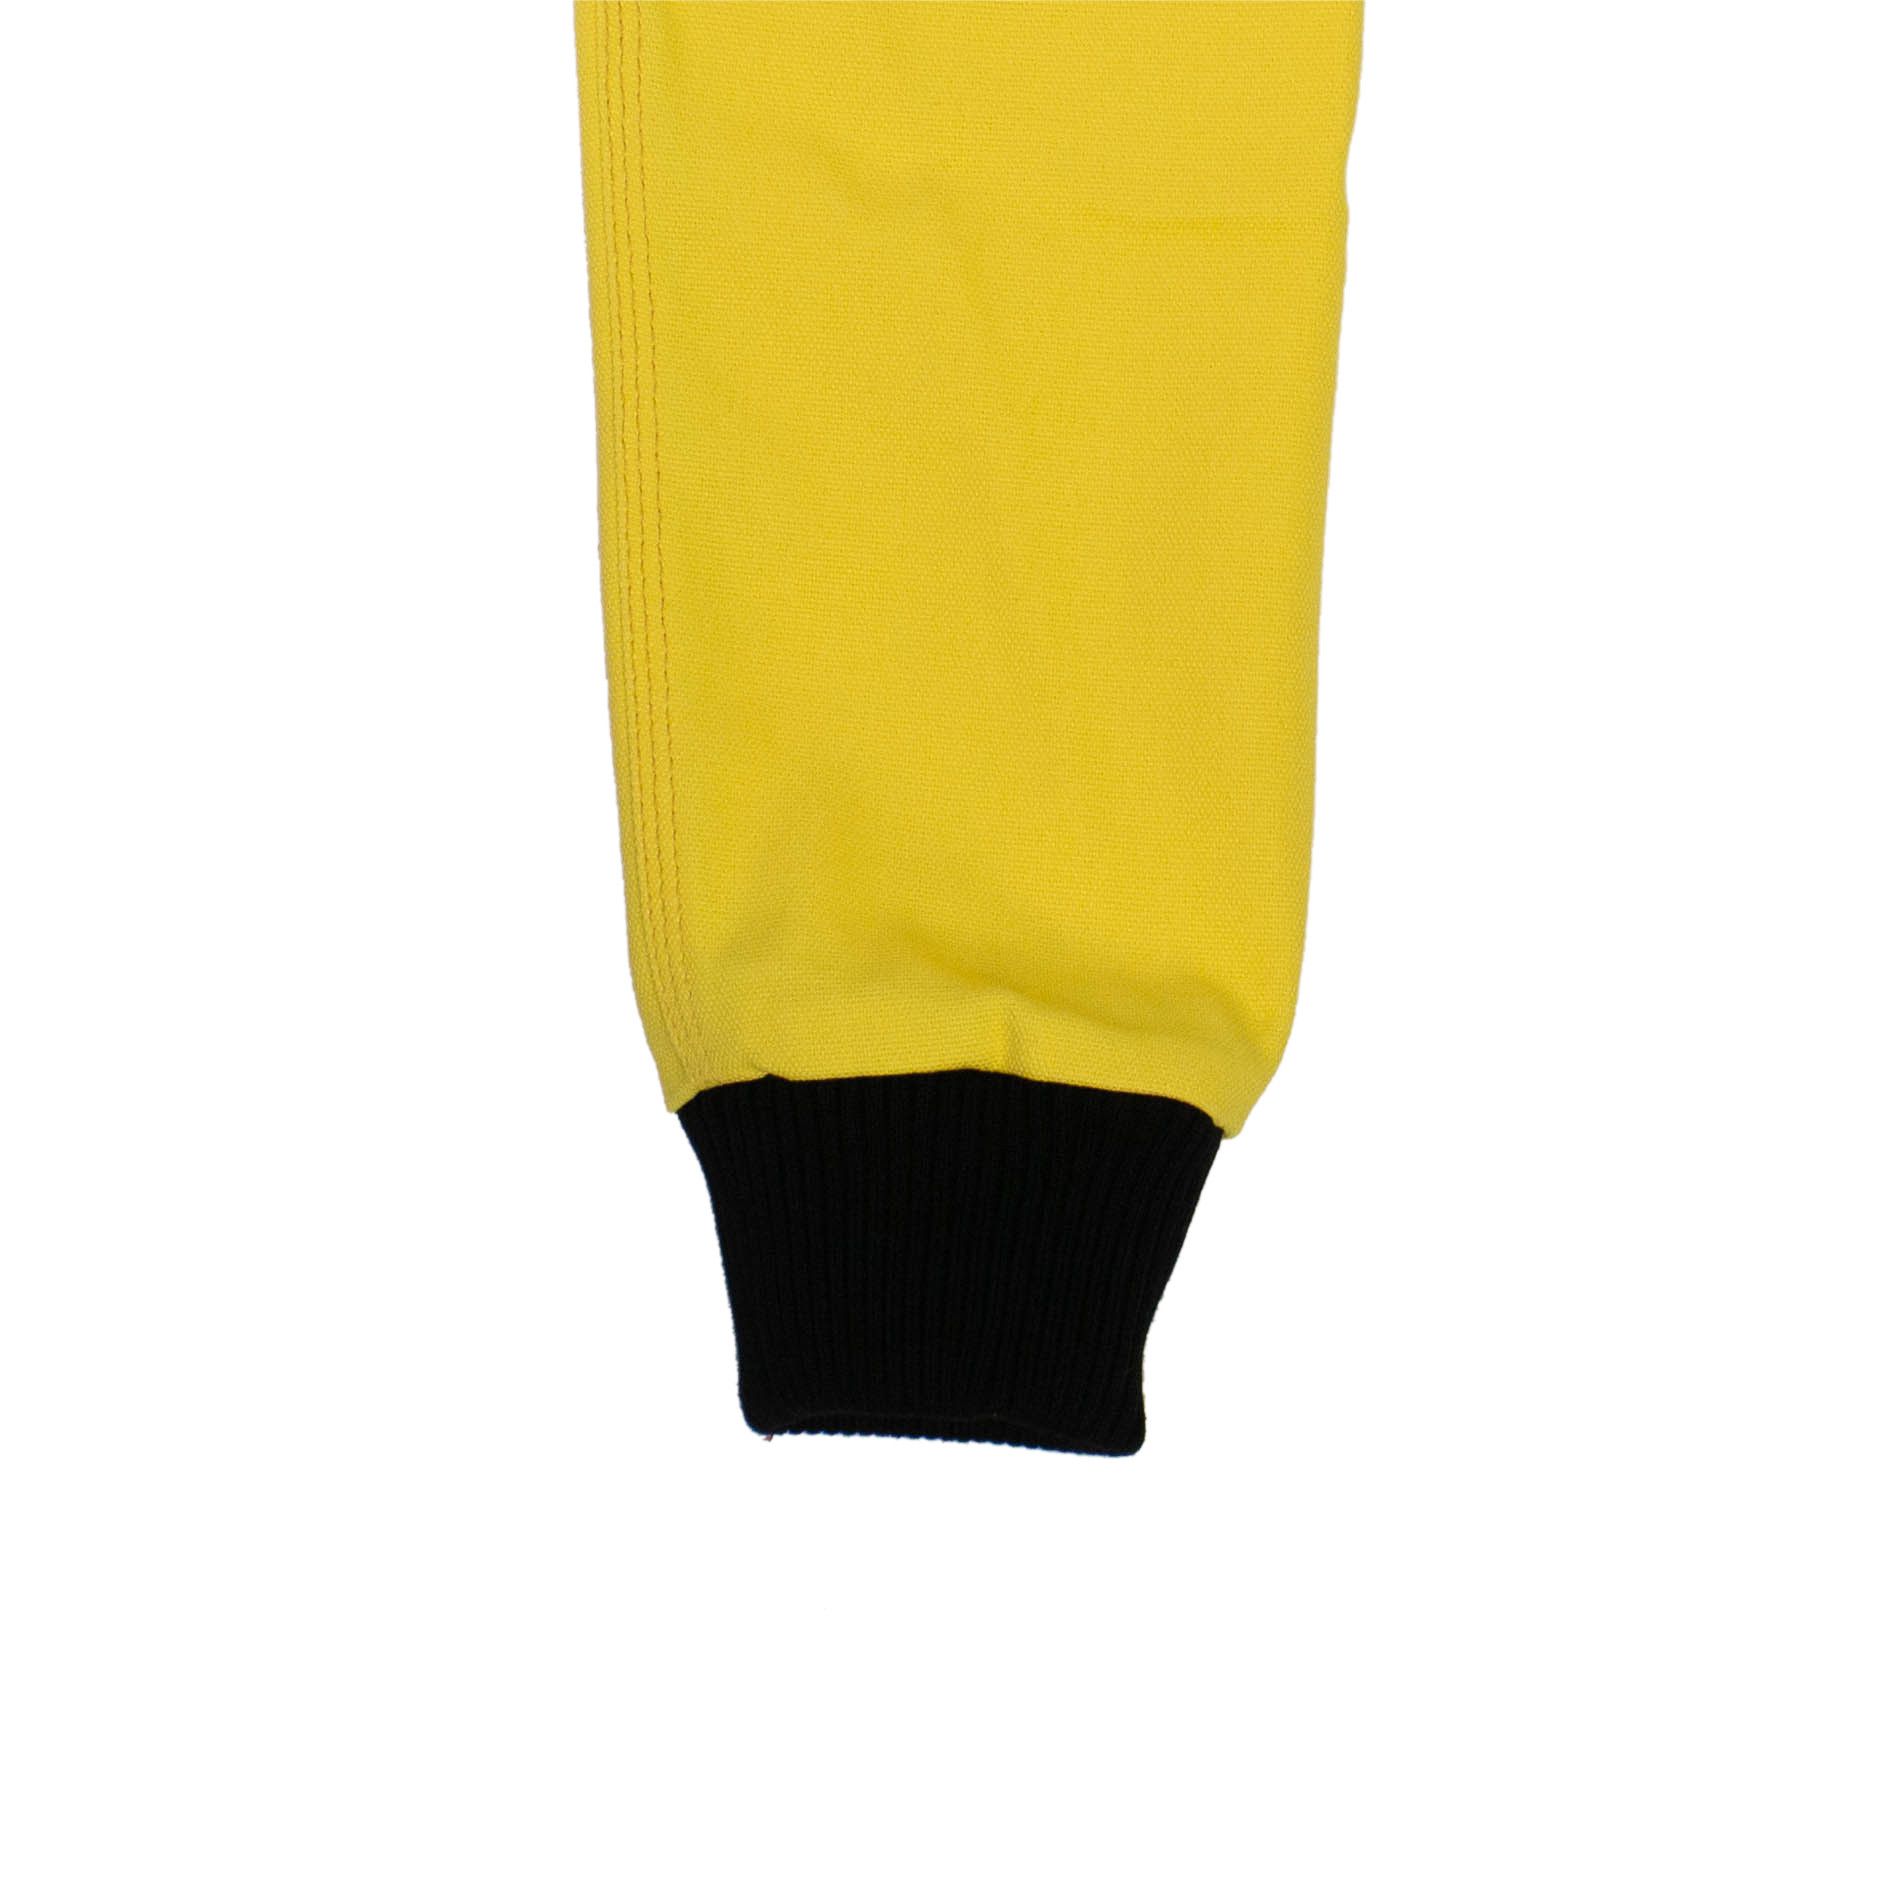 Vlone Yellow Canvas Hoodie Size US L / EU 52-54 / 3 - 5 Preview